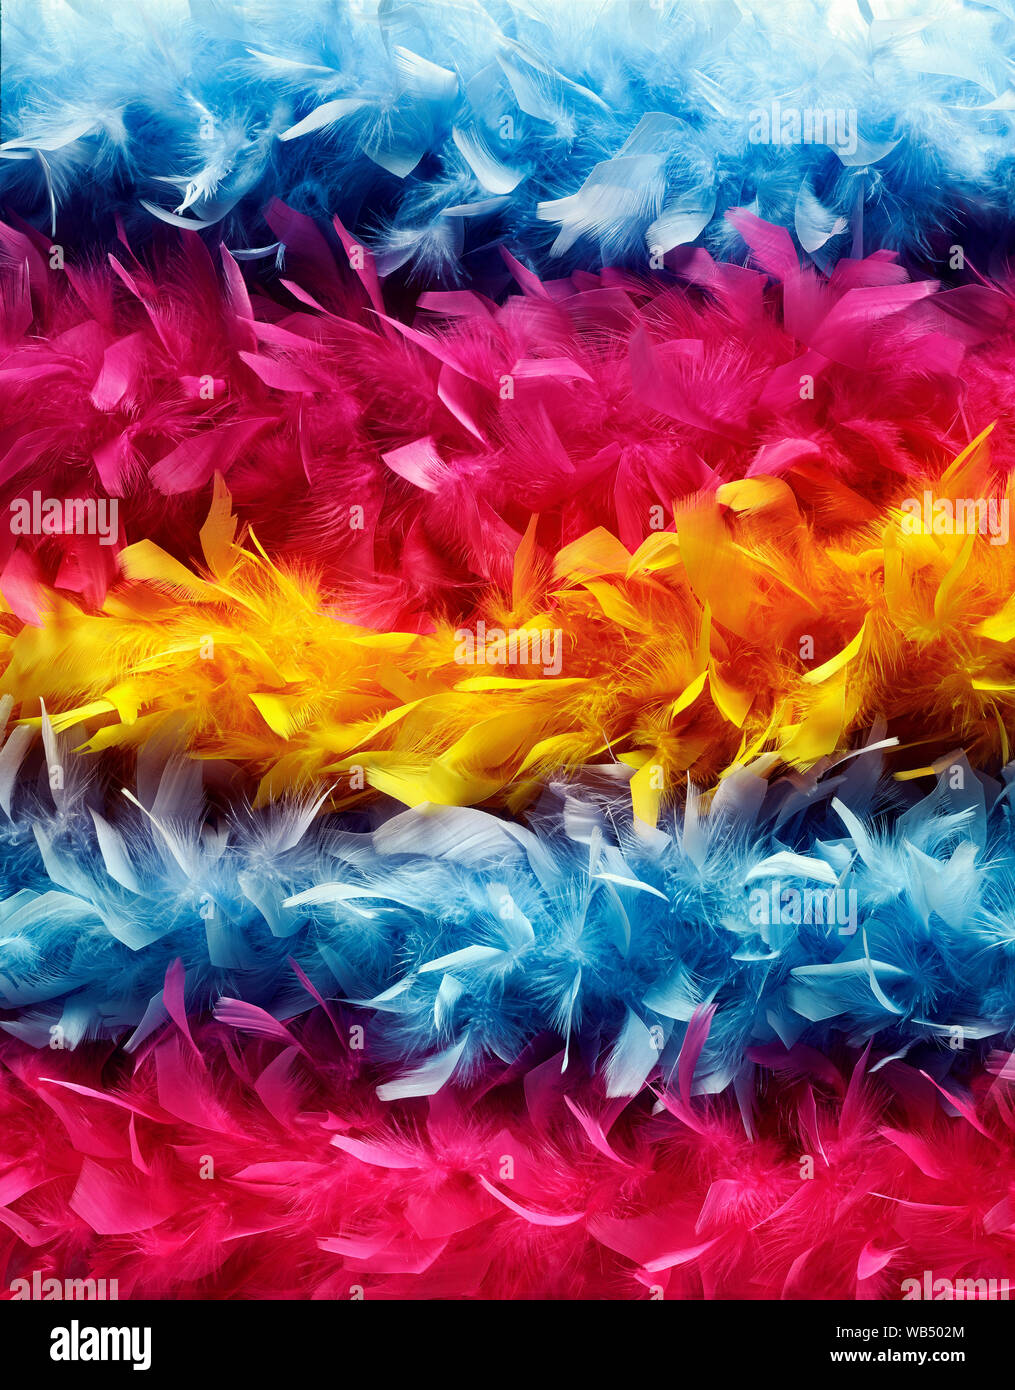 Colorful feather boas Stock Photo - Alamy